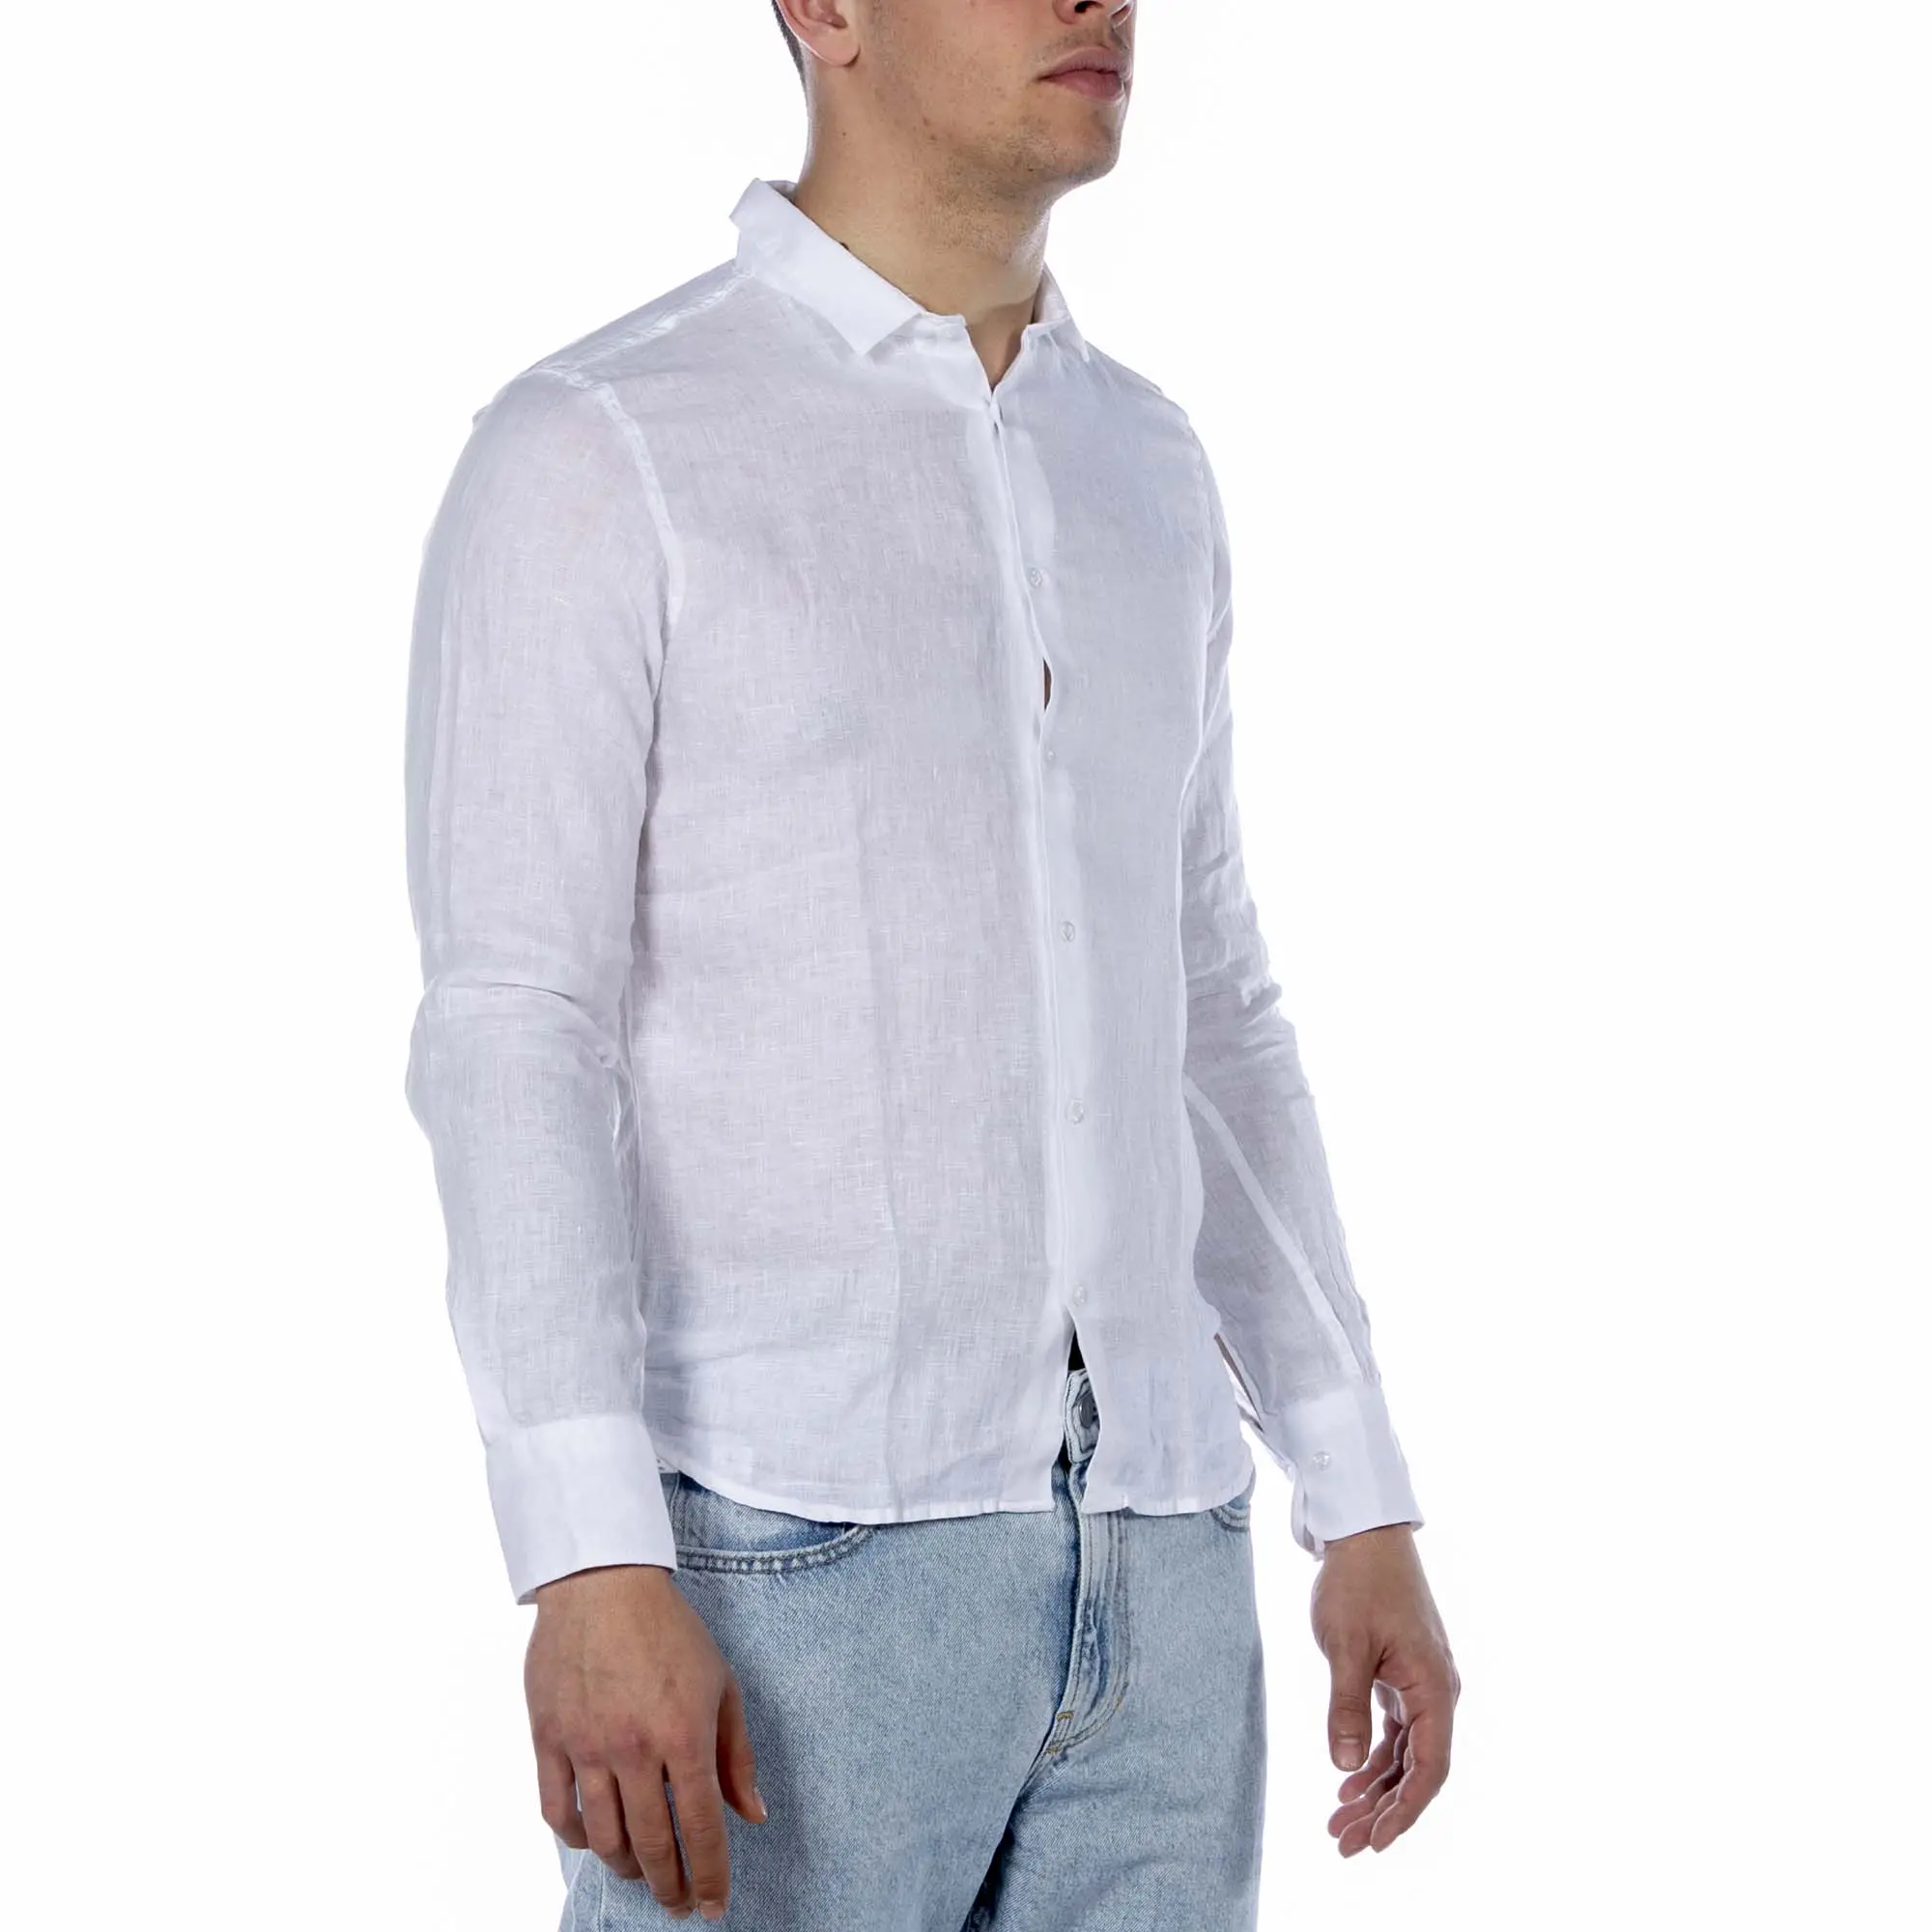 Italian Spring Summer Collection Men's Clothing Long Sleeve French Collar 100% Linen Shirt for Men